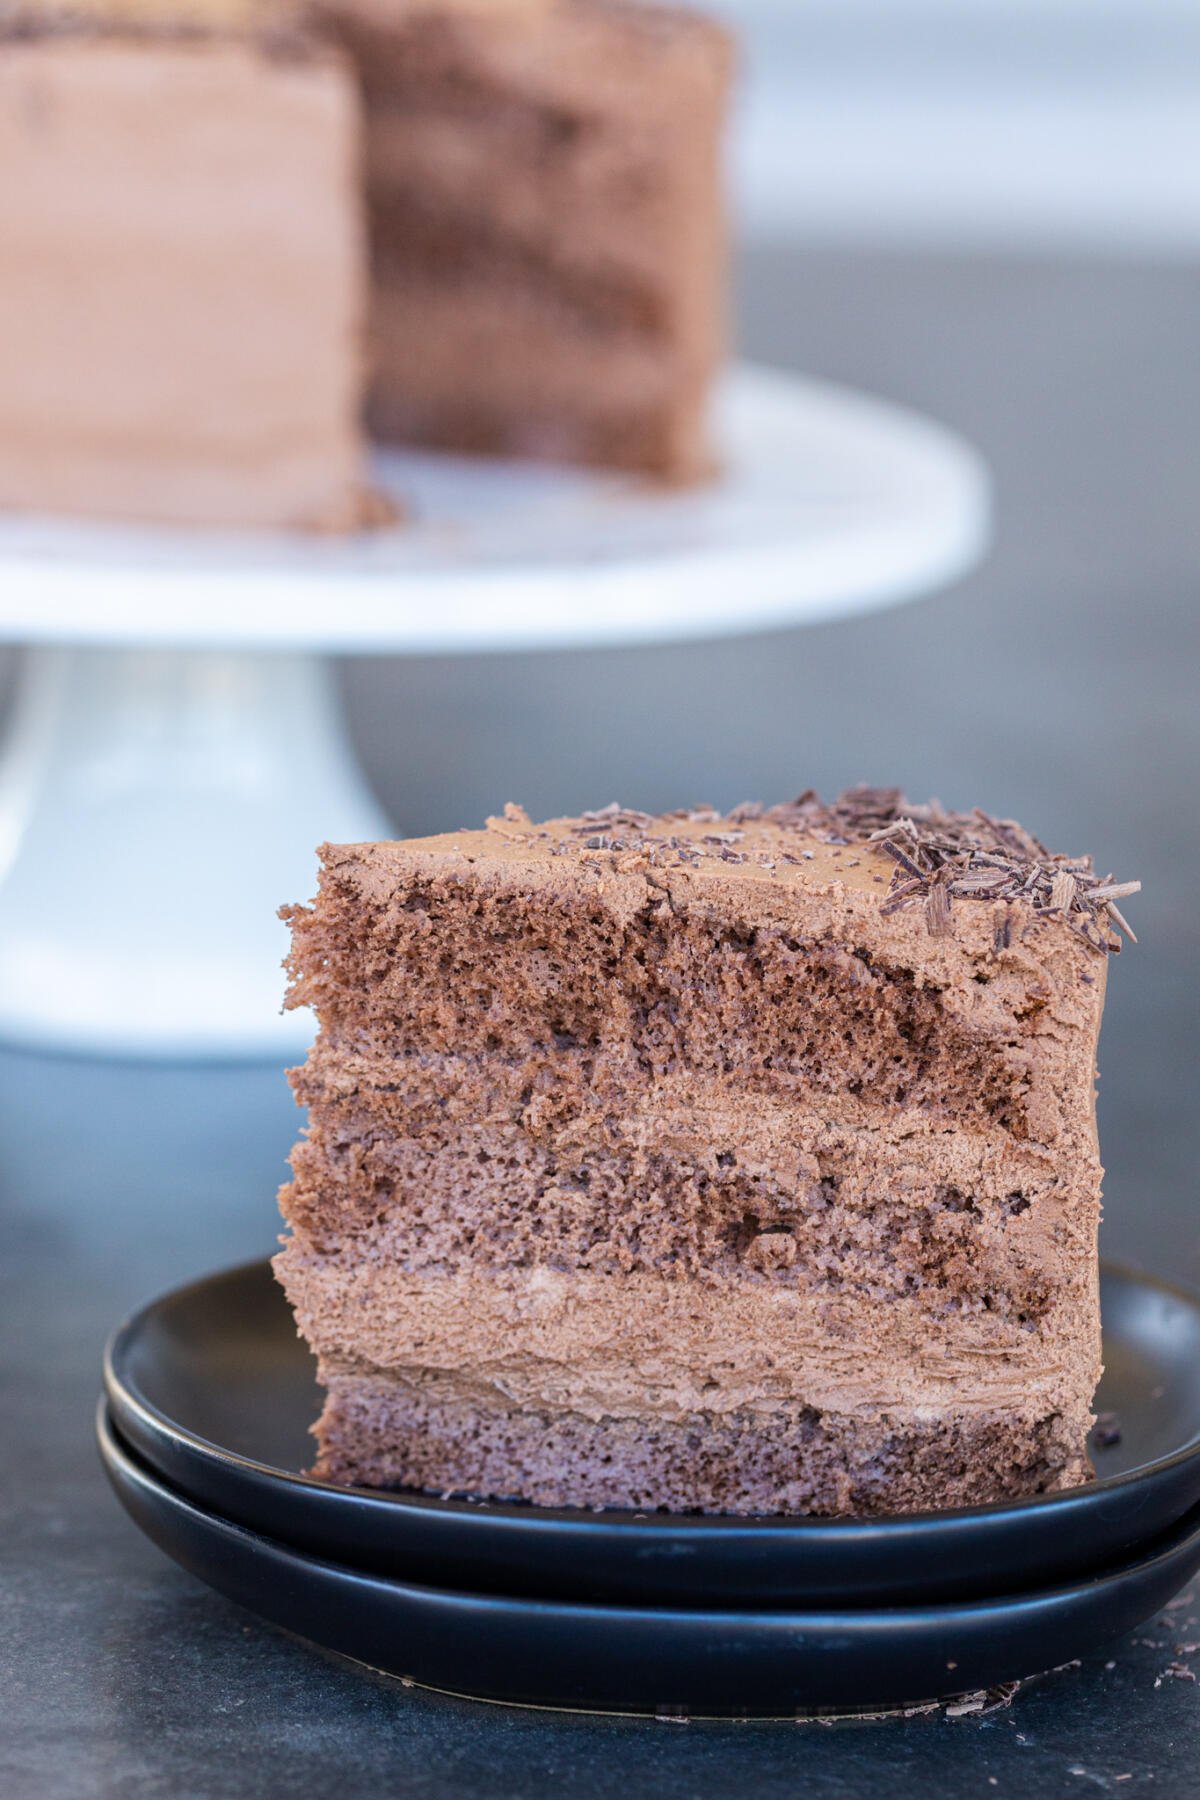 Share 70+ chocolate dust cake best - in.daotaonec